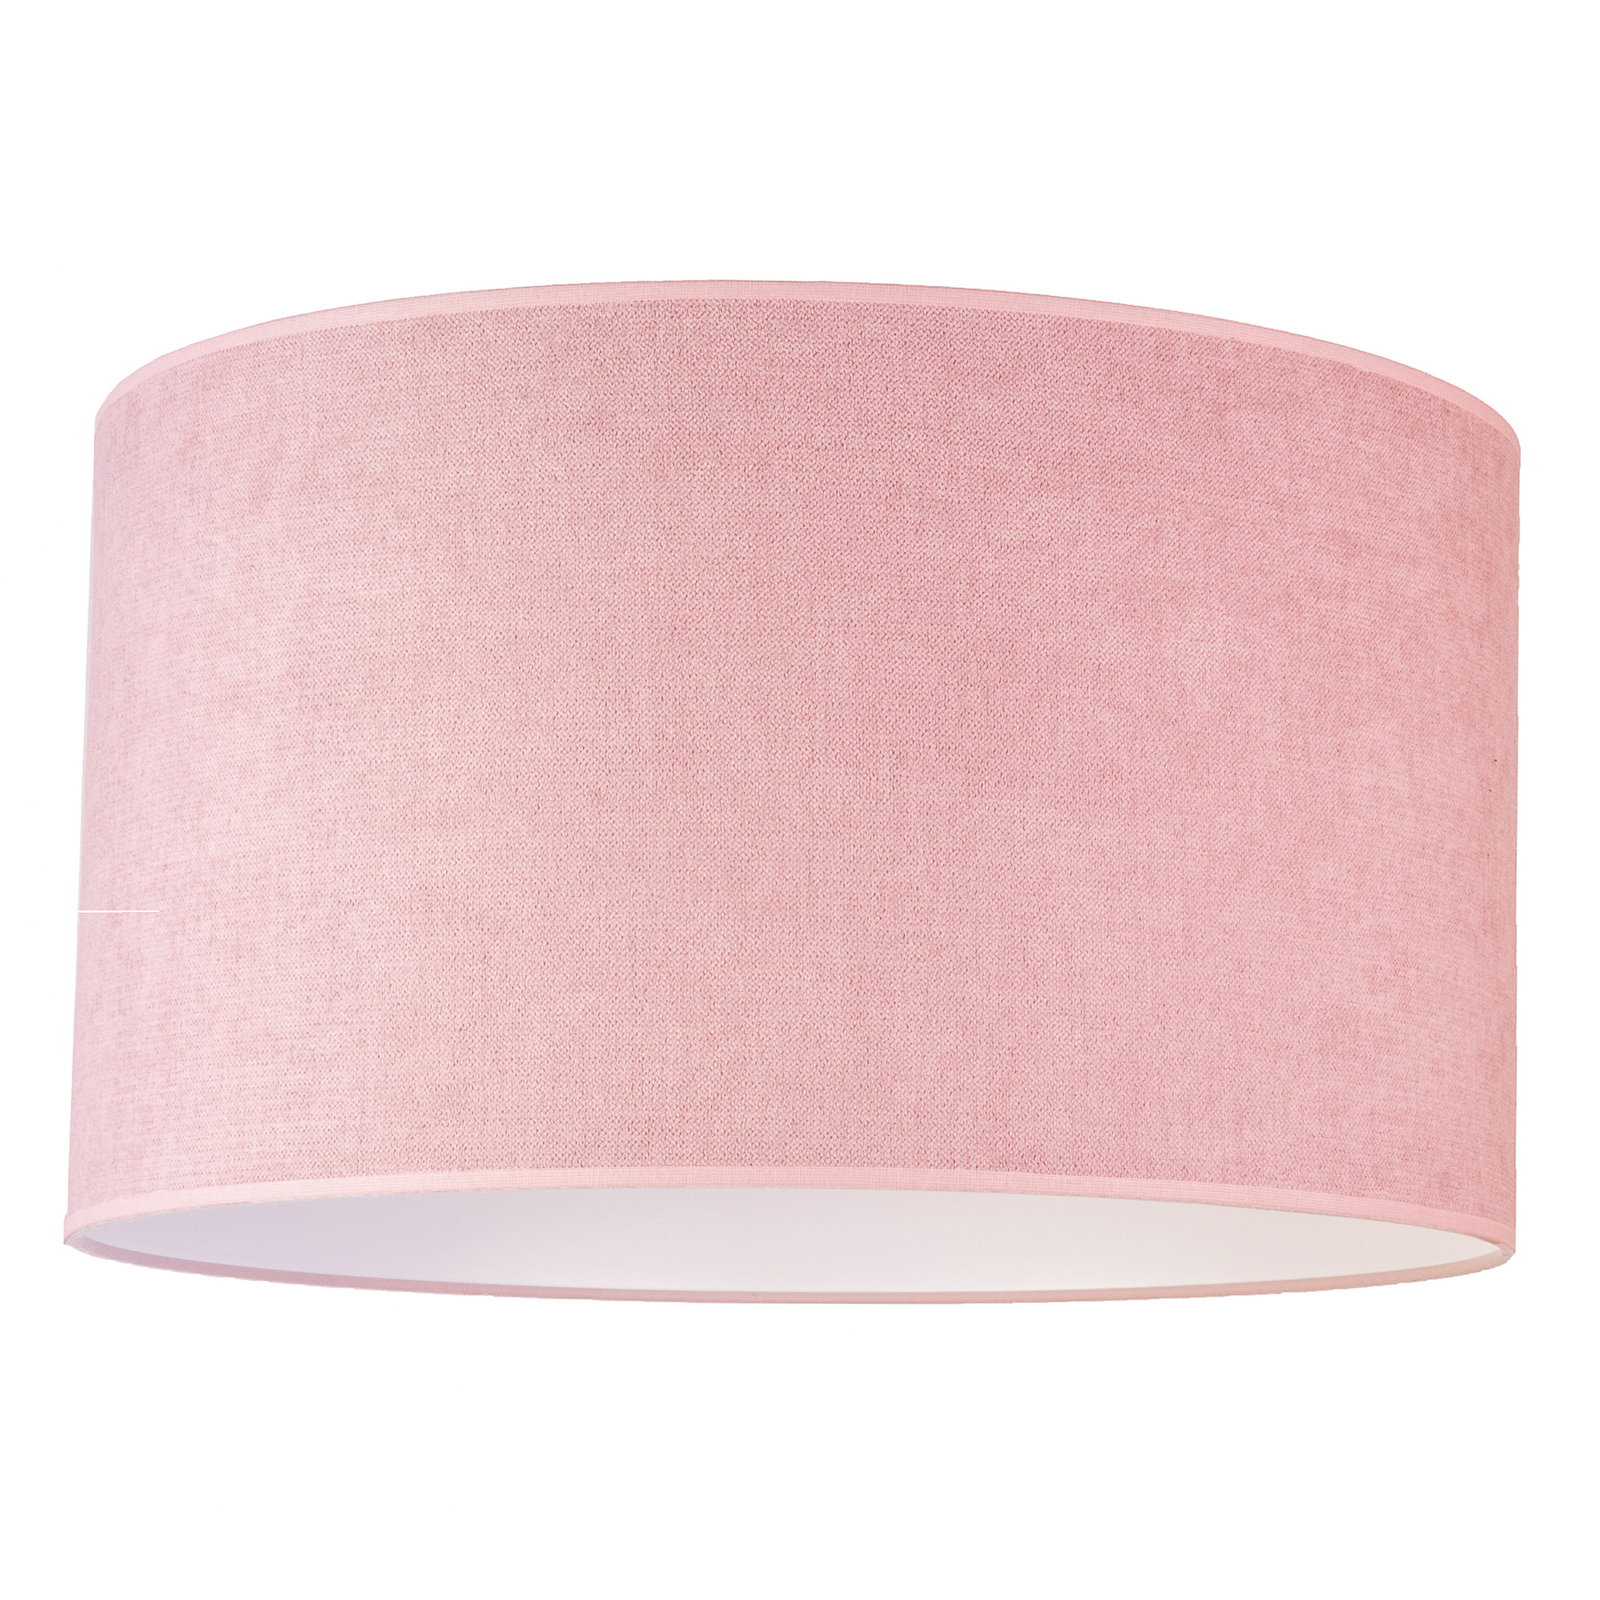 Deckenlampe Pastell Roller Ø 60cm rosa